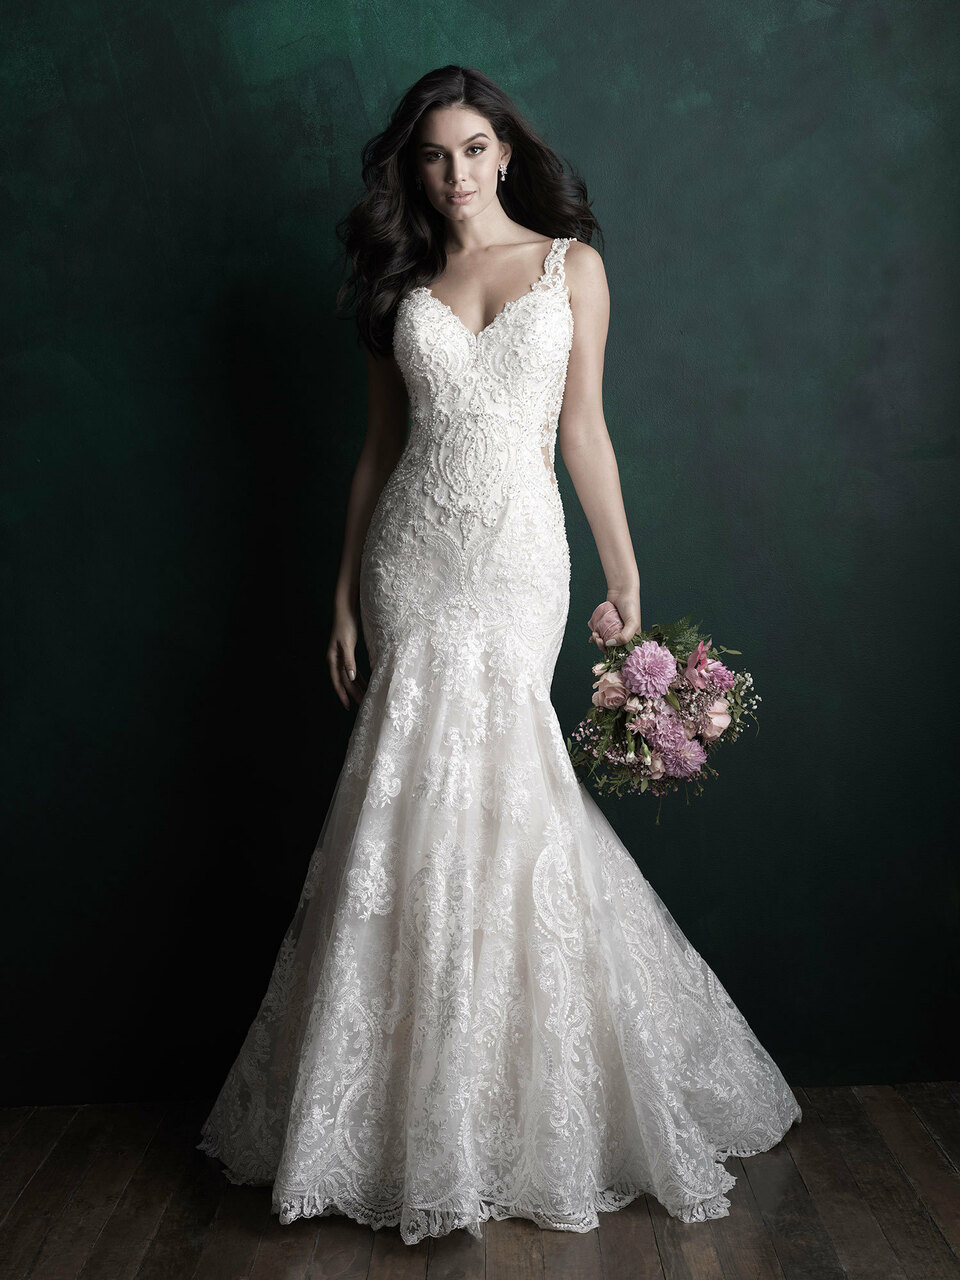 Allure - Wedding Dresses And Tuxedos, Elizabeth Scott Bridal